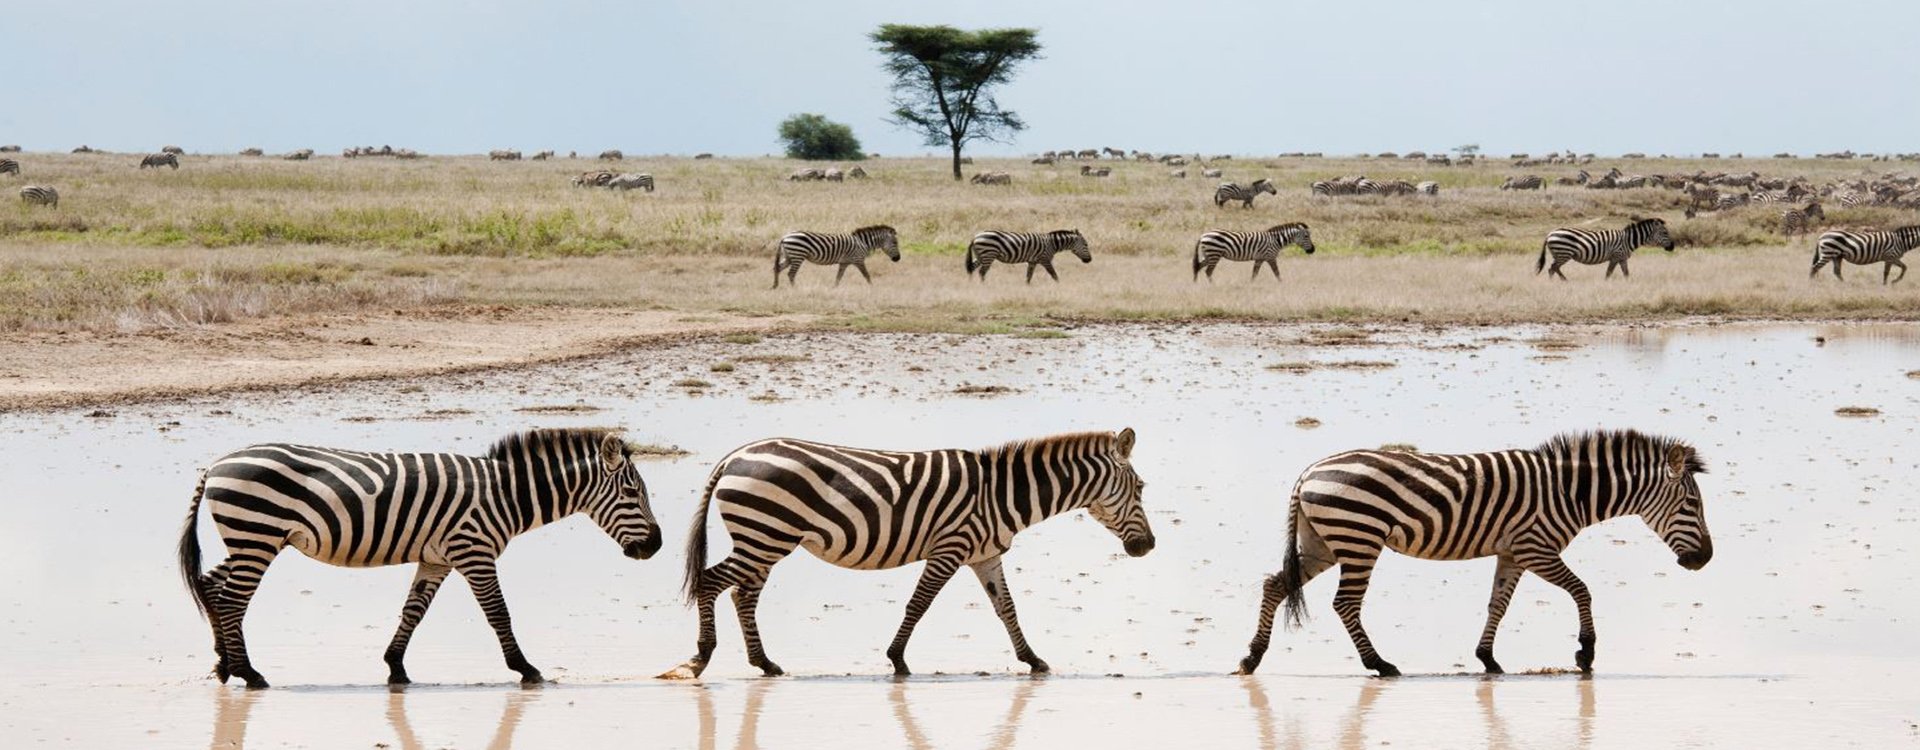 Tanzania_Serengeti_Zebras_iStock_000018427437